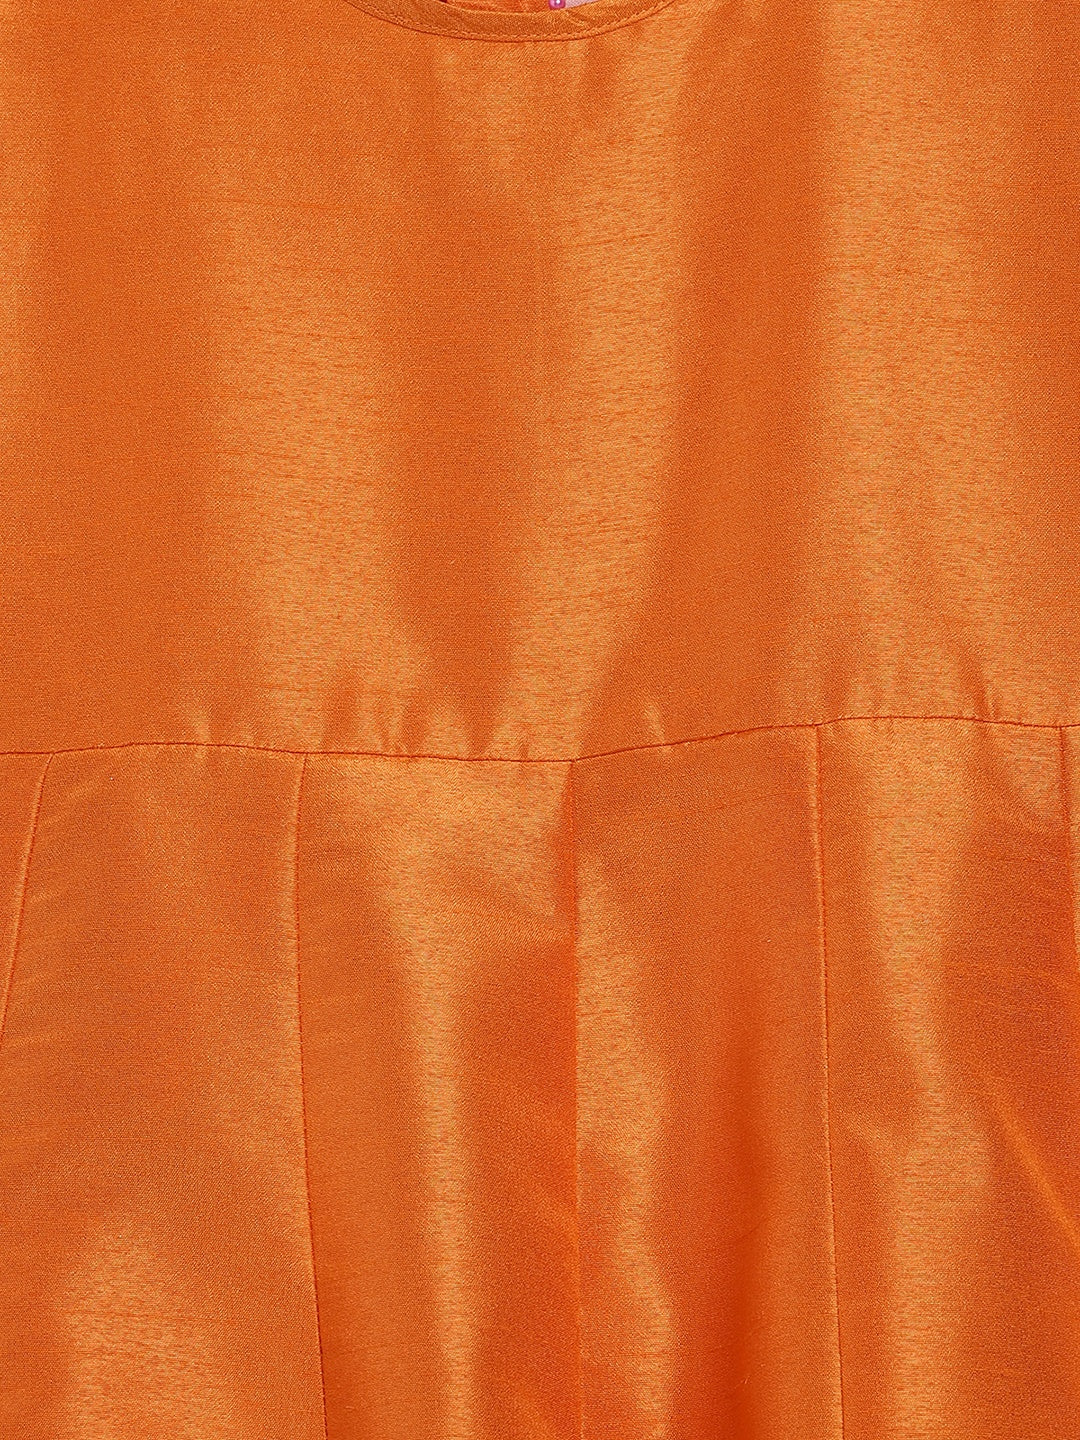 Color_Orange